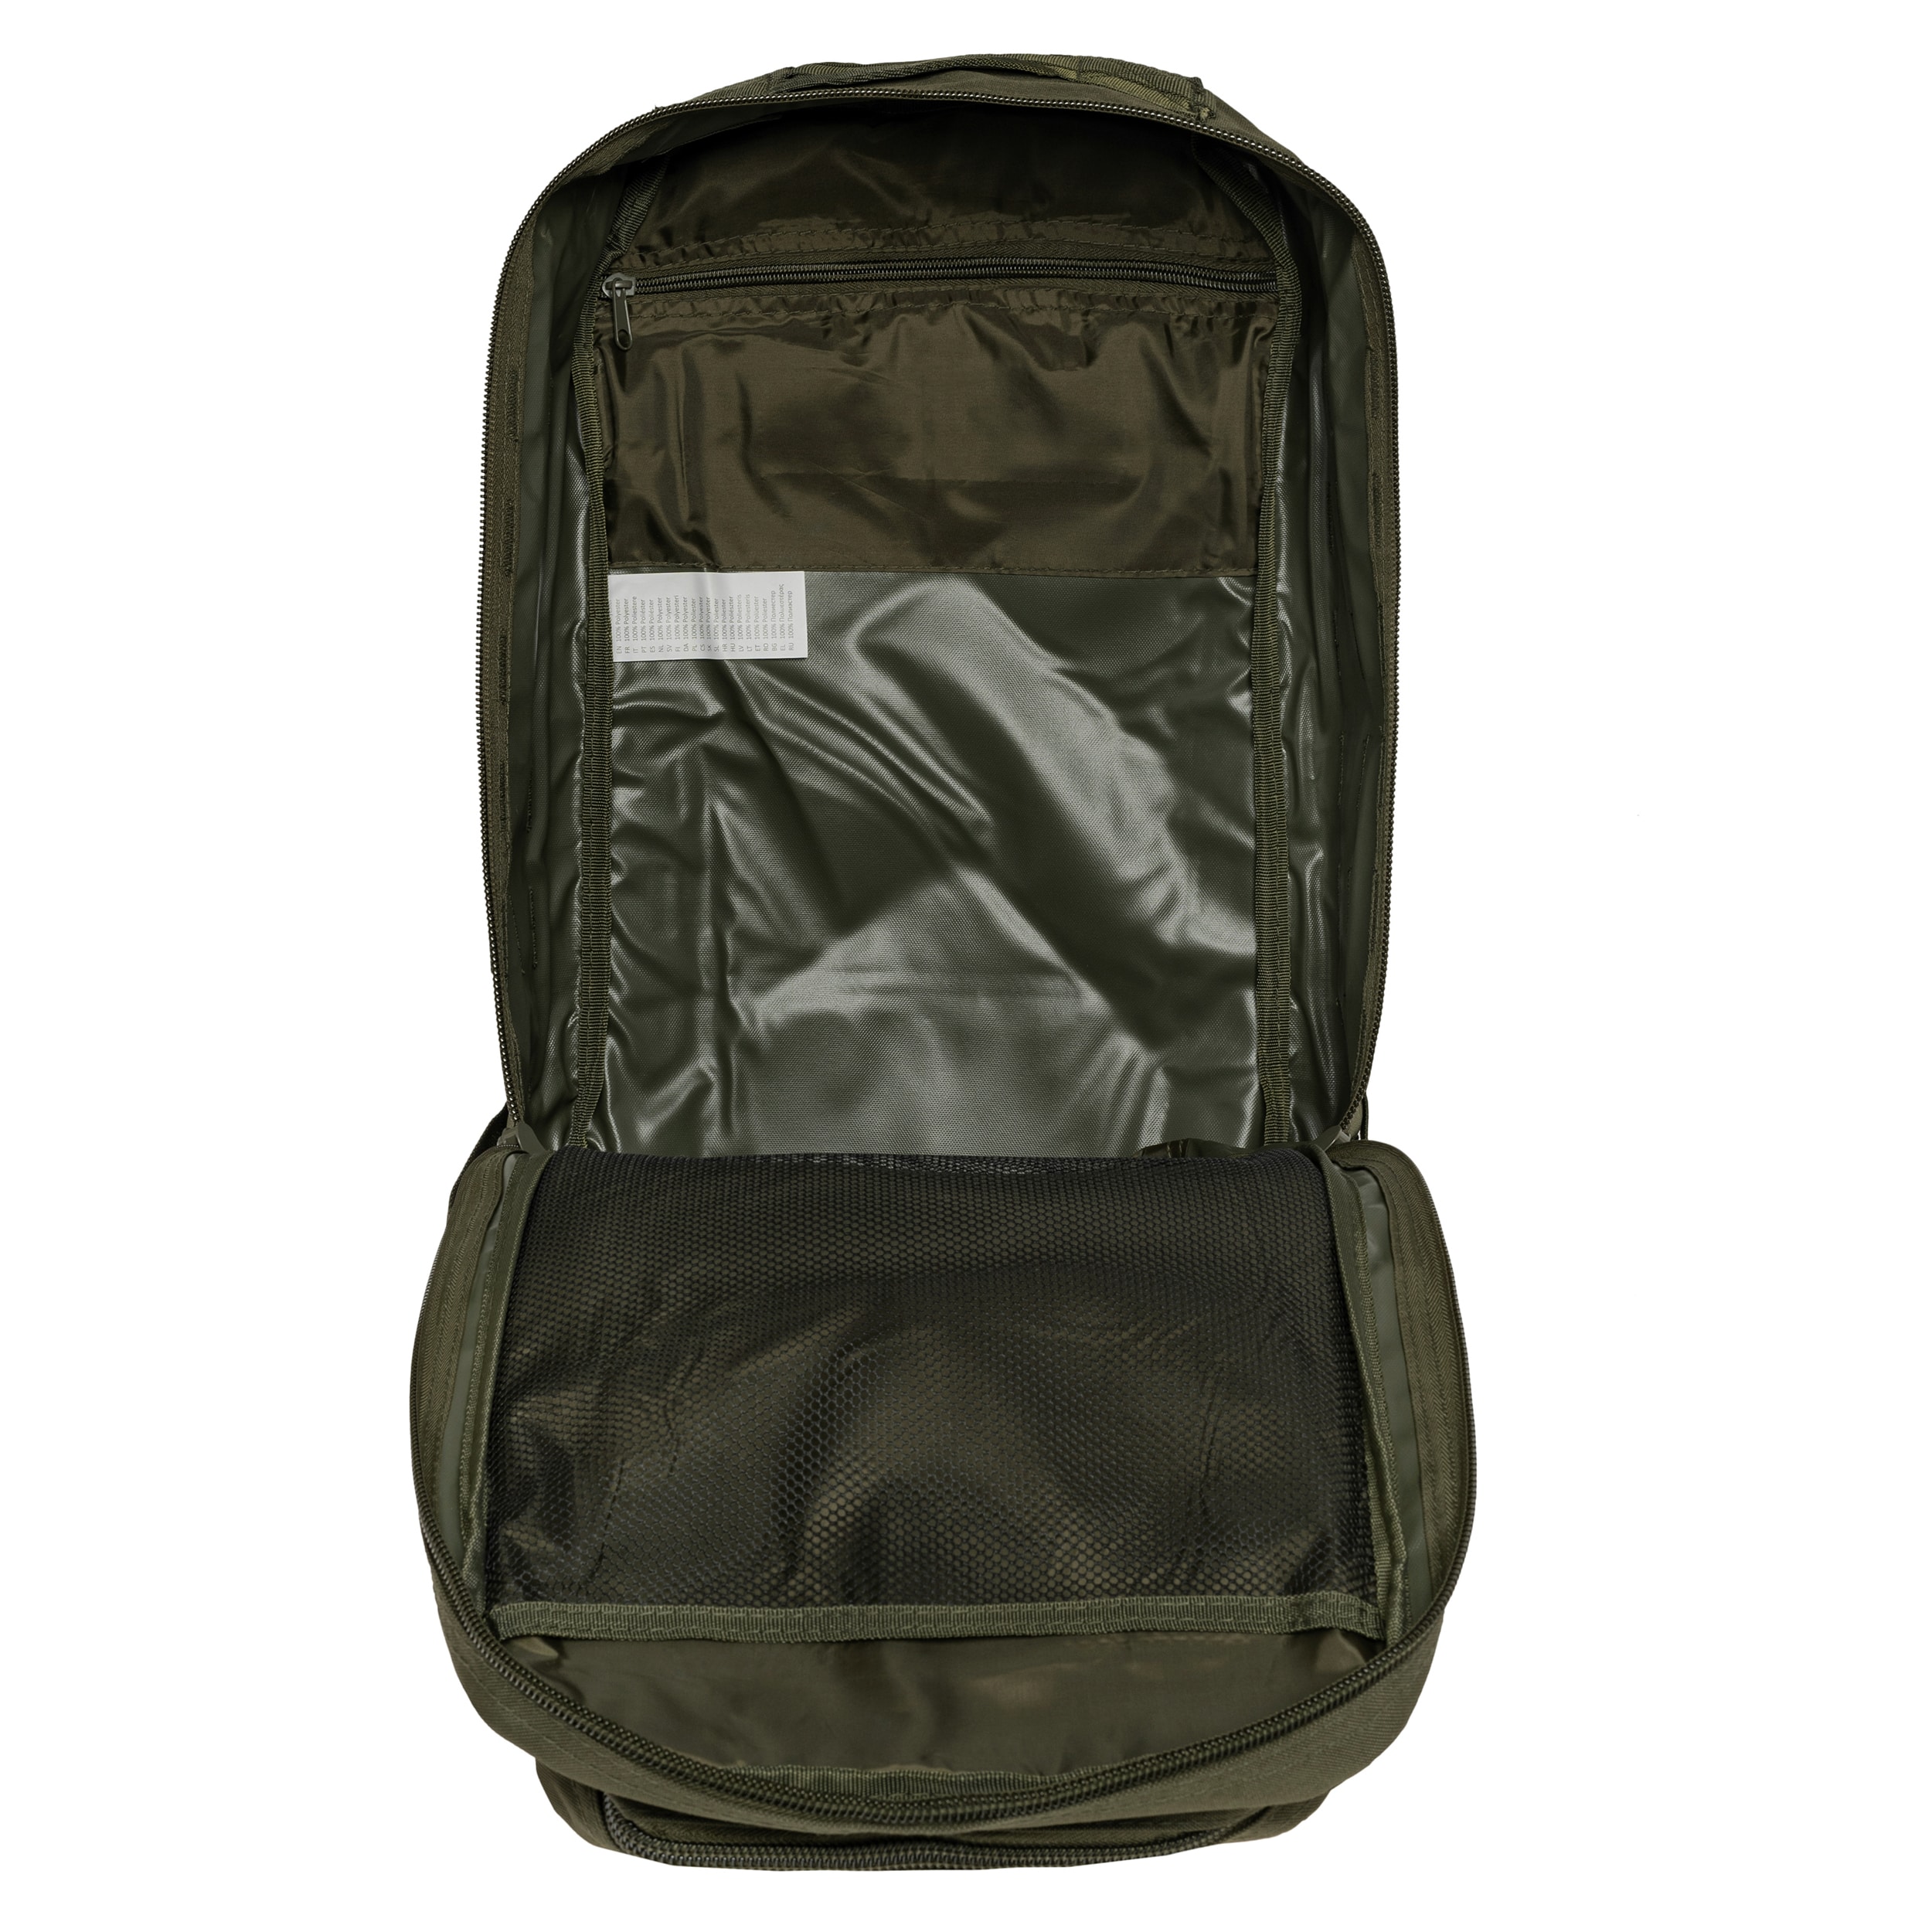 Plecak Mil-Tec Assault Pack Large 36 l - Olive